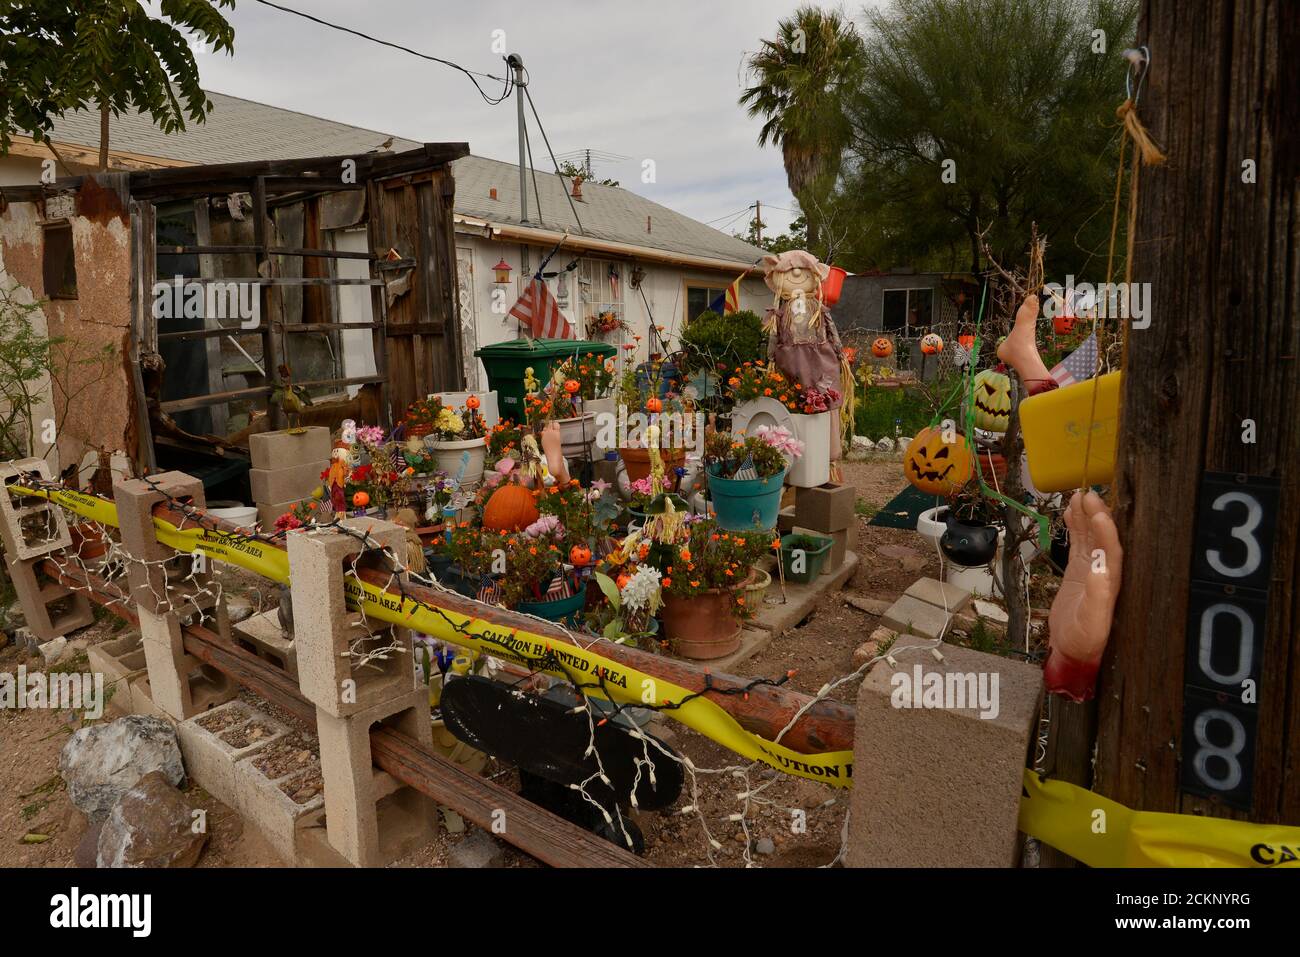 A Halloween display in the yard of a home, Tombstone, Arizona, USA. Stock Photo